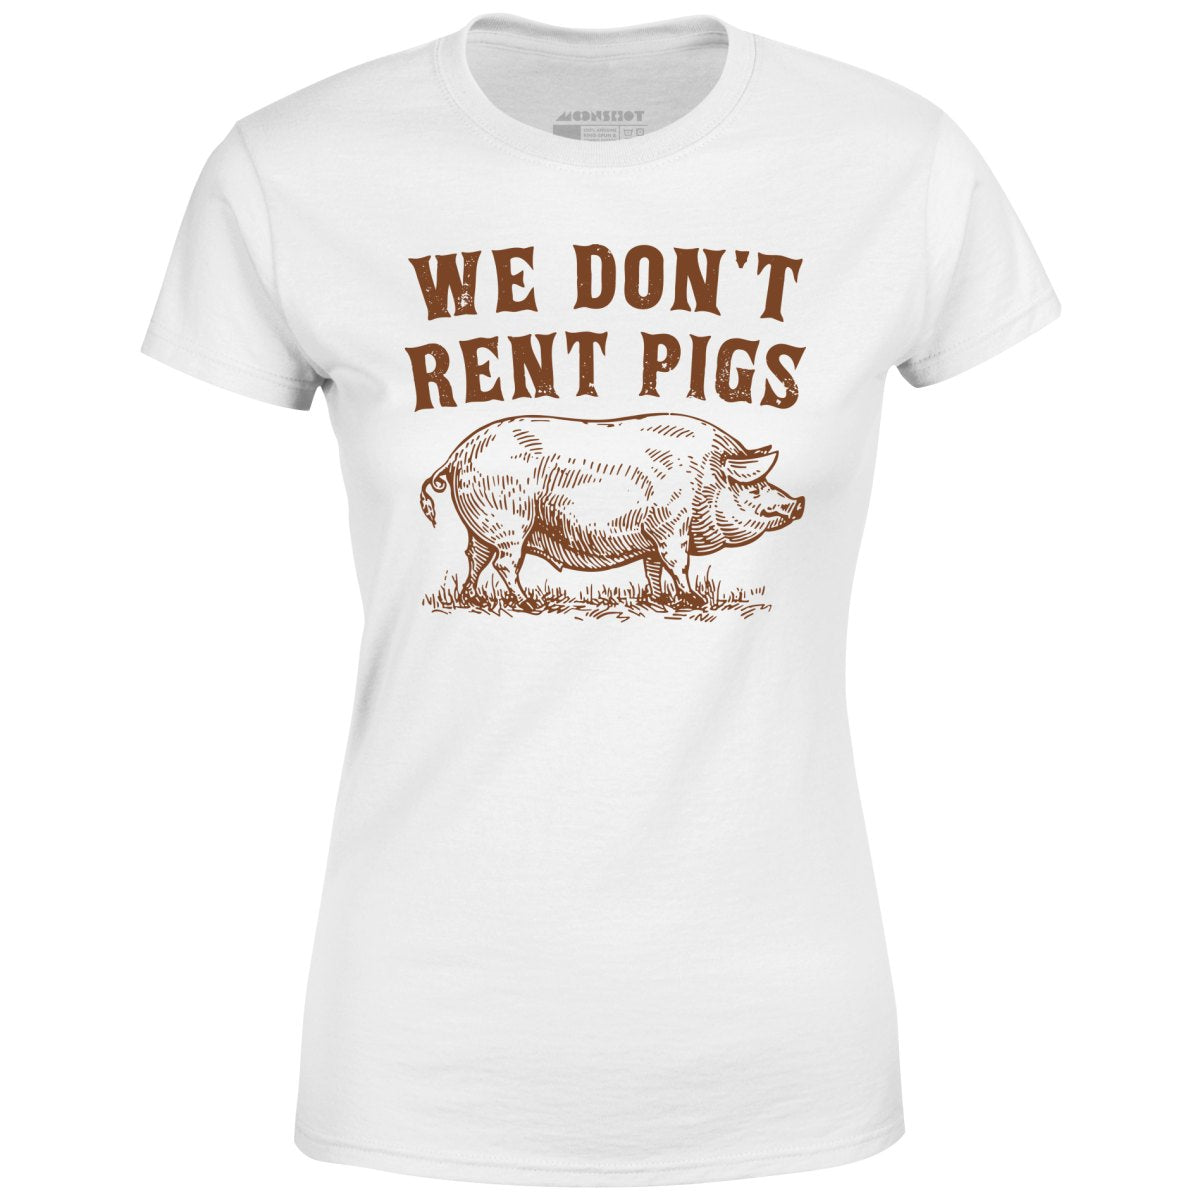 We Don't Rent Pigs - Women's T-Shirt